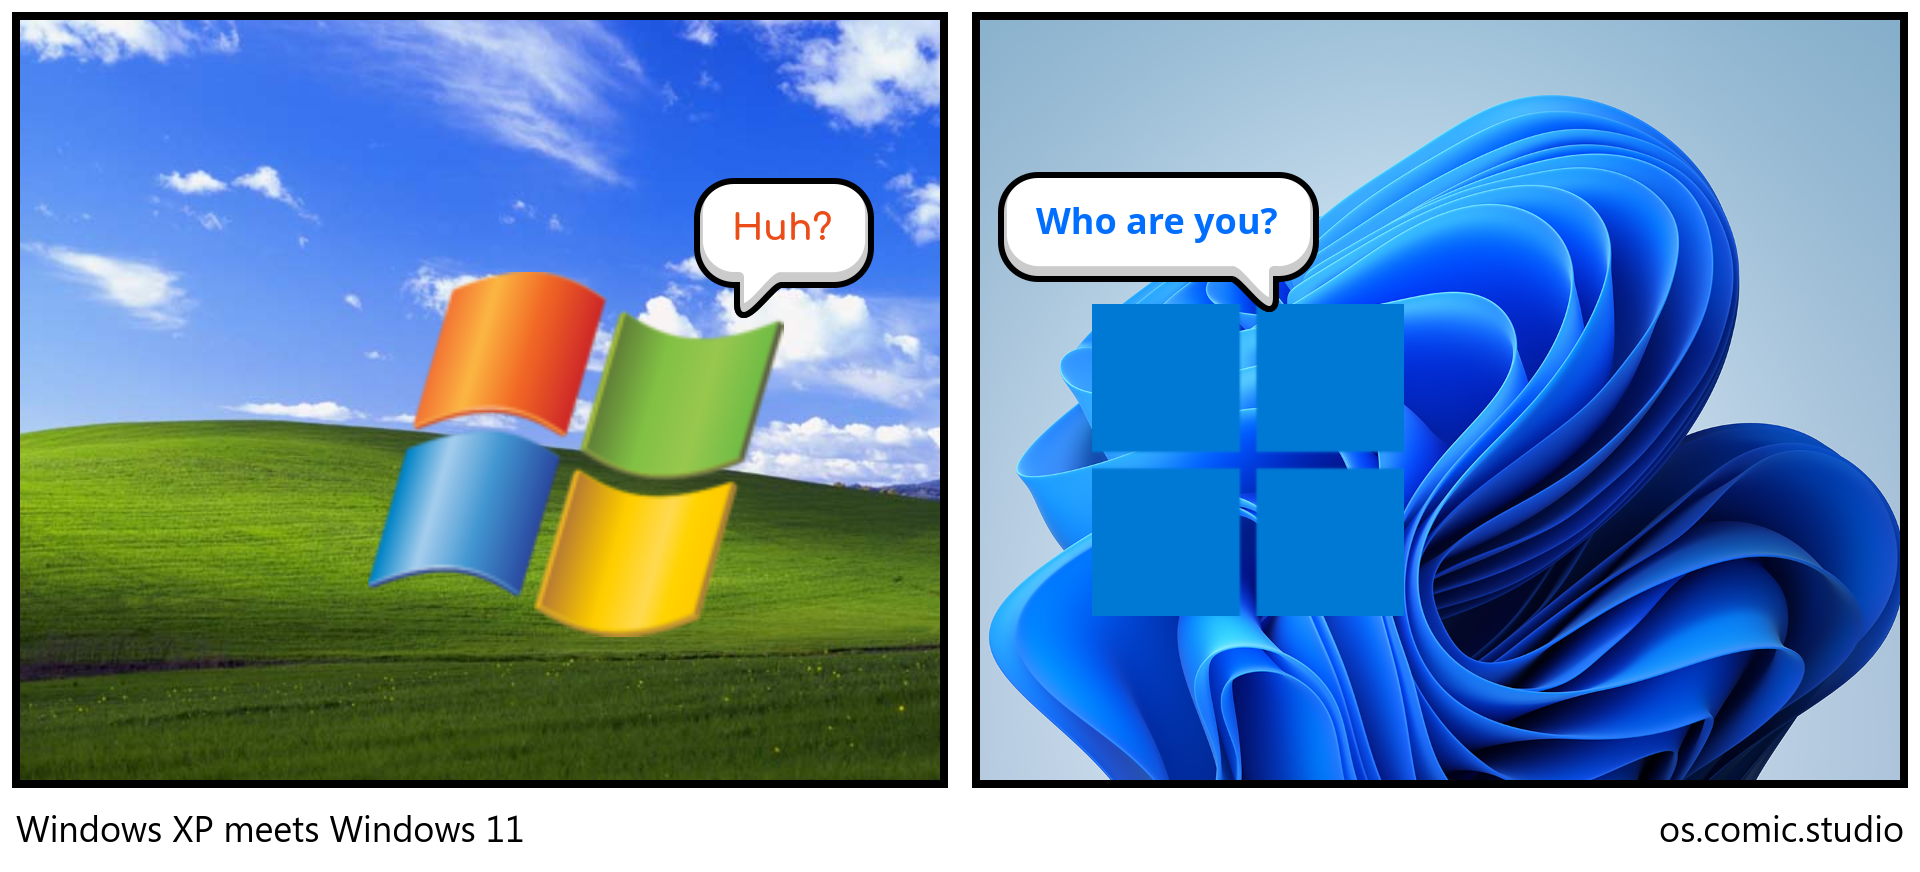 Windows XP meets Windows 11